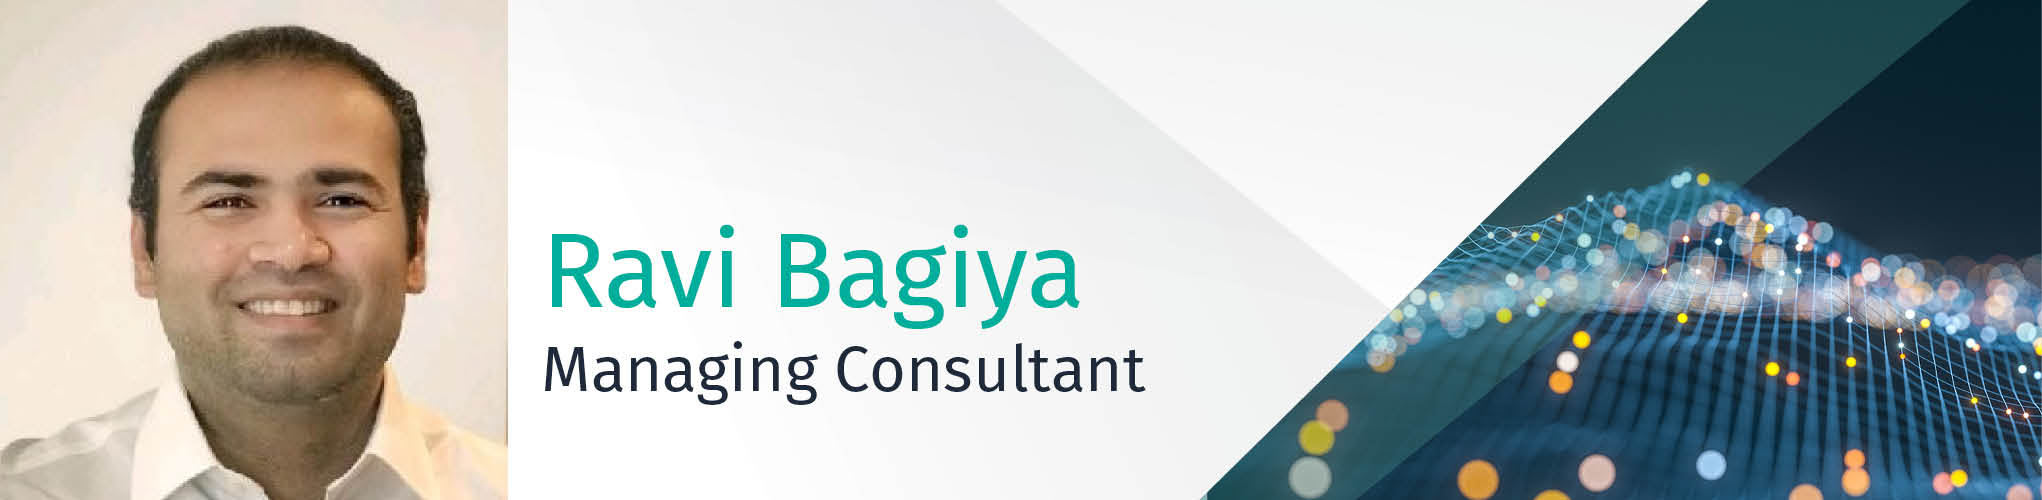 Meet-the-data-scientist_Profile-Box-Ravi-Bagiya_2019-10-25